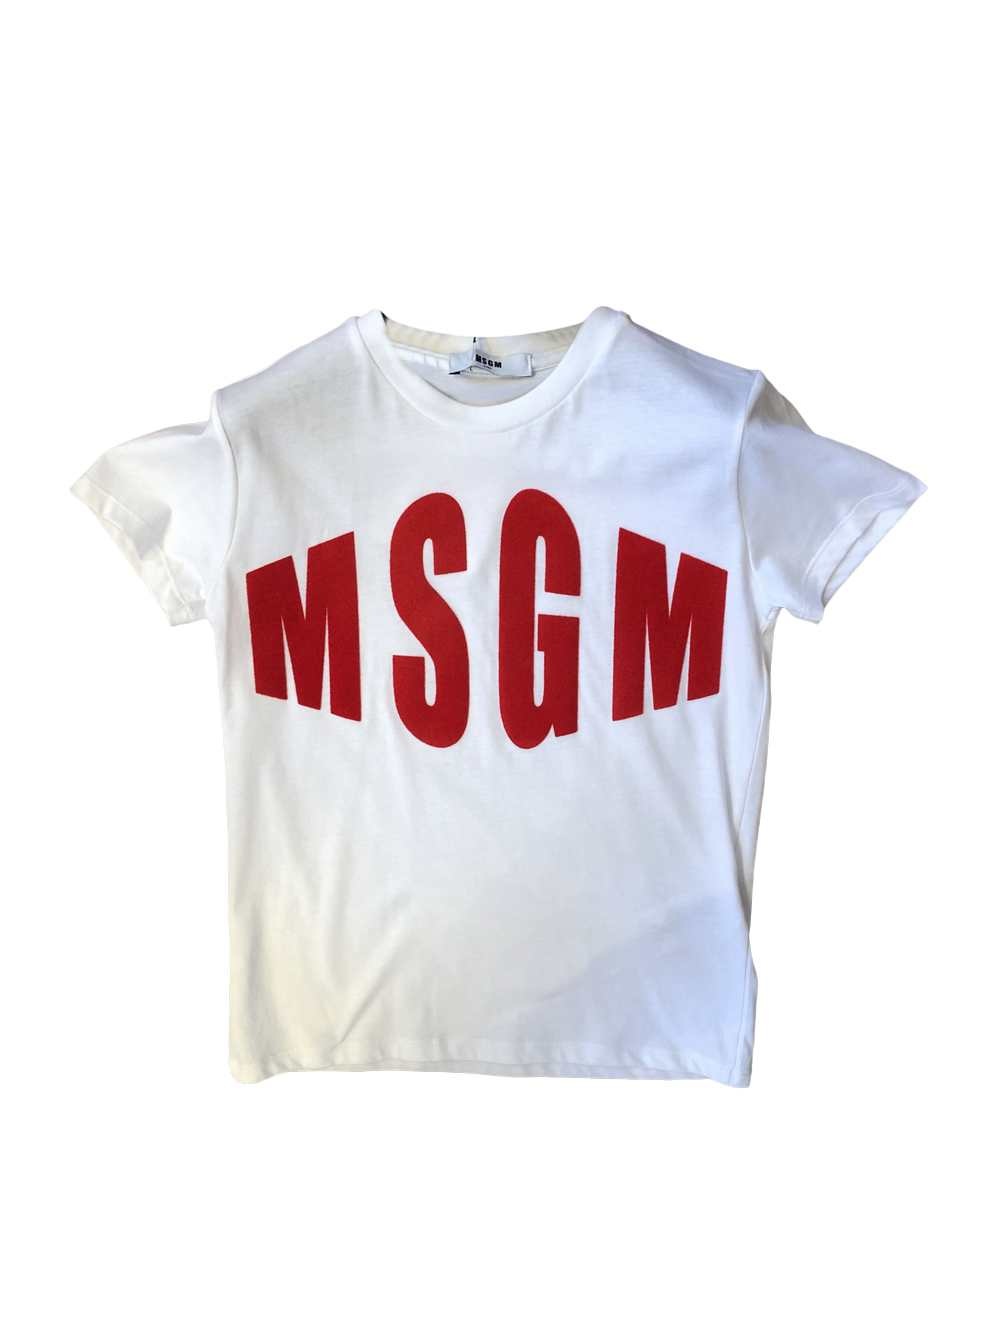 Frank Glimlach aanbidden MSGM T-shirt wit rode letters km